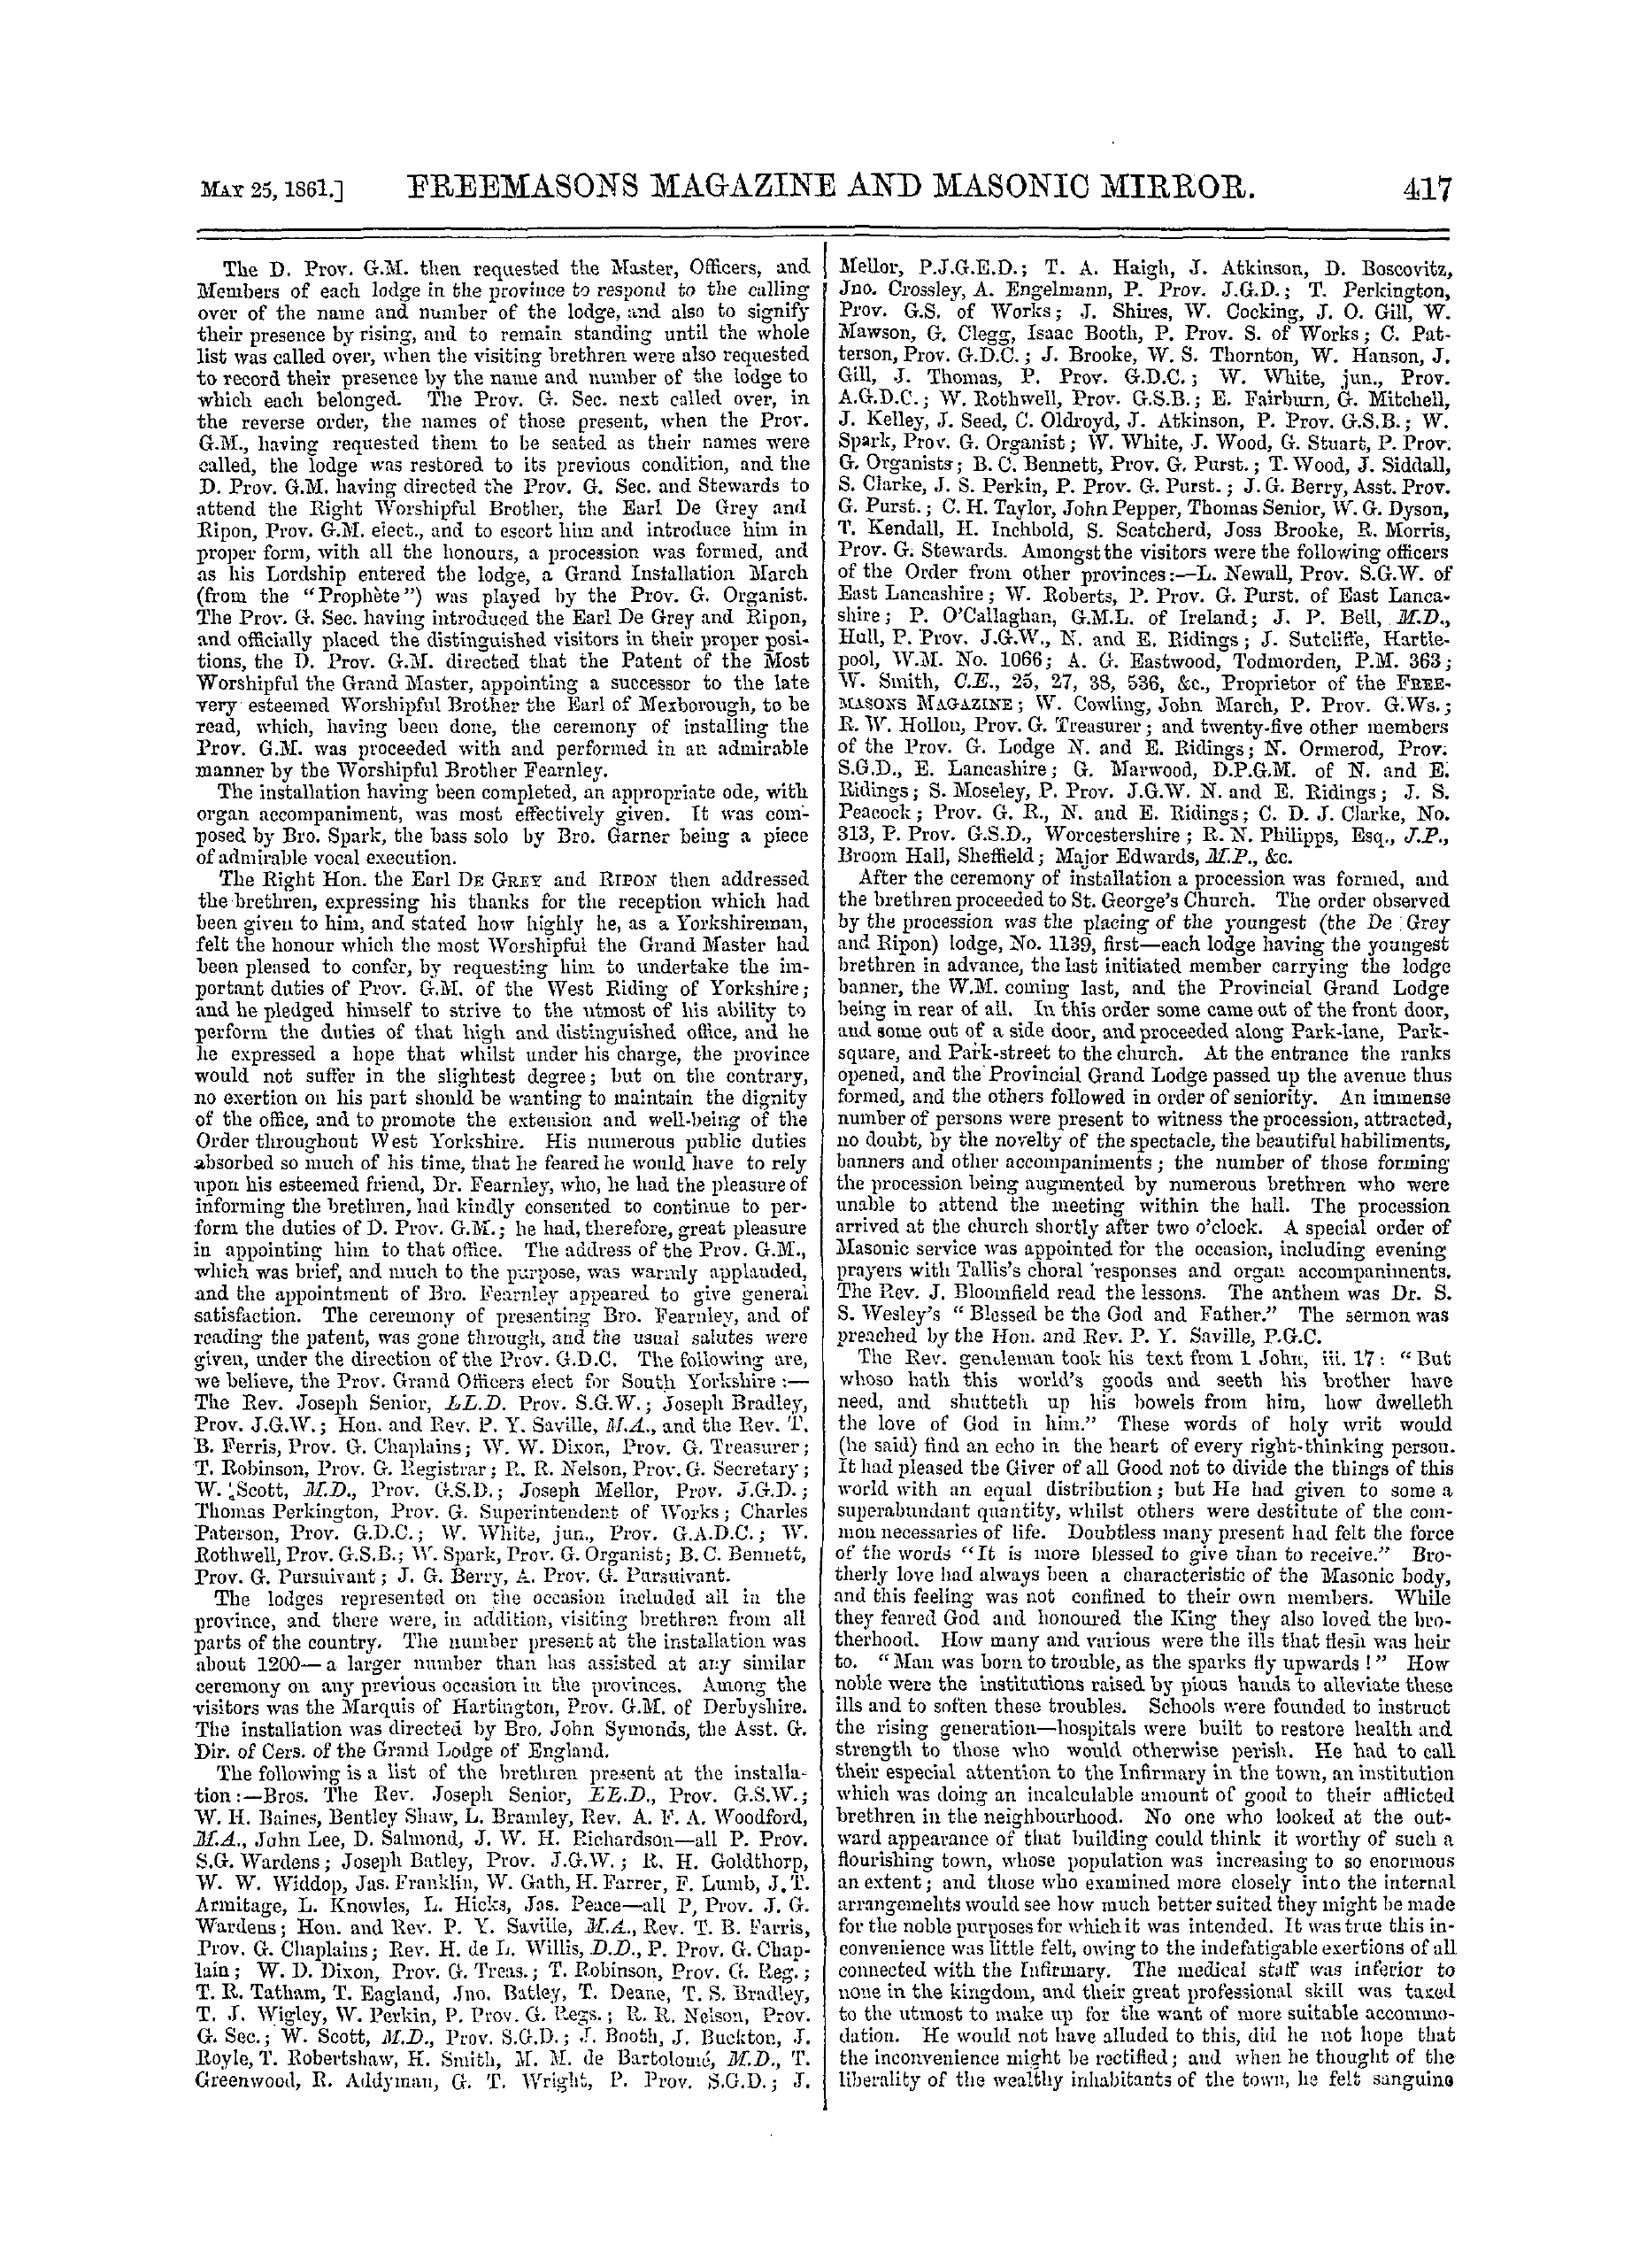 The Freemasons' Monthly Magazine: 1861-05-25 - : Provincial.